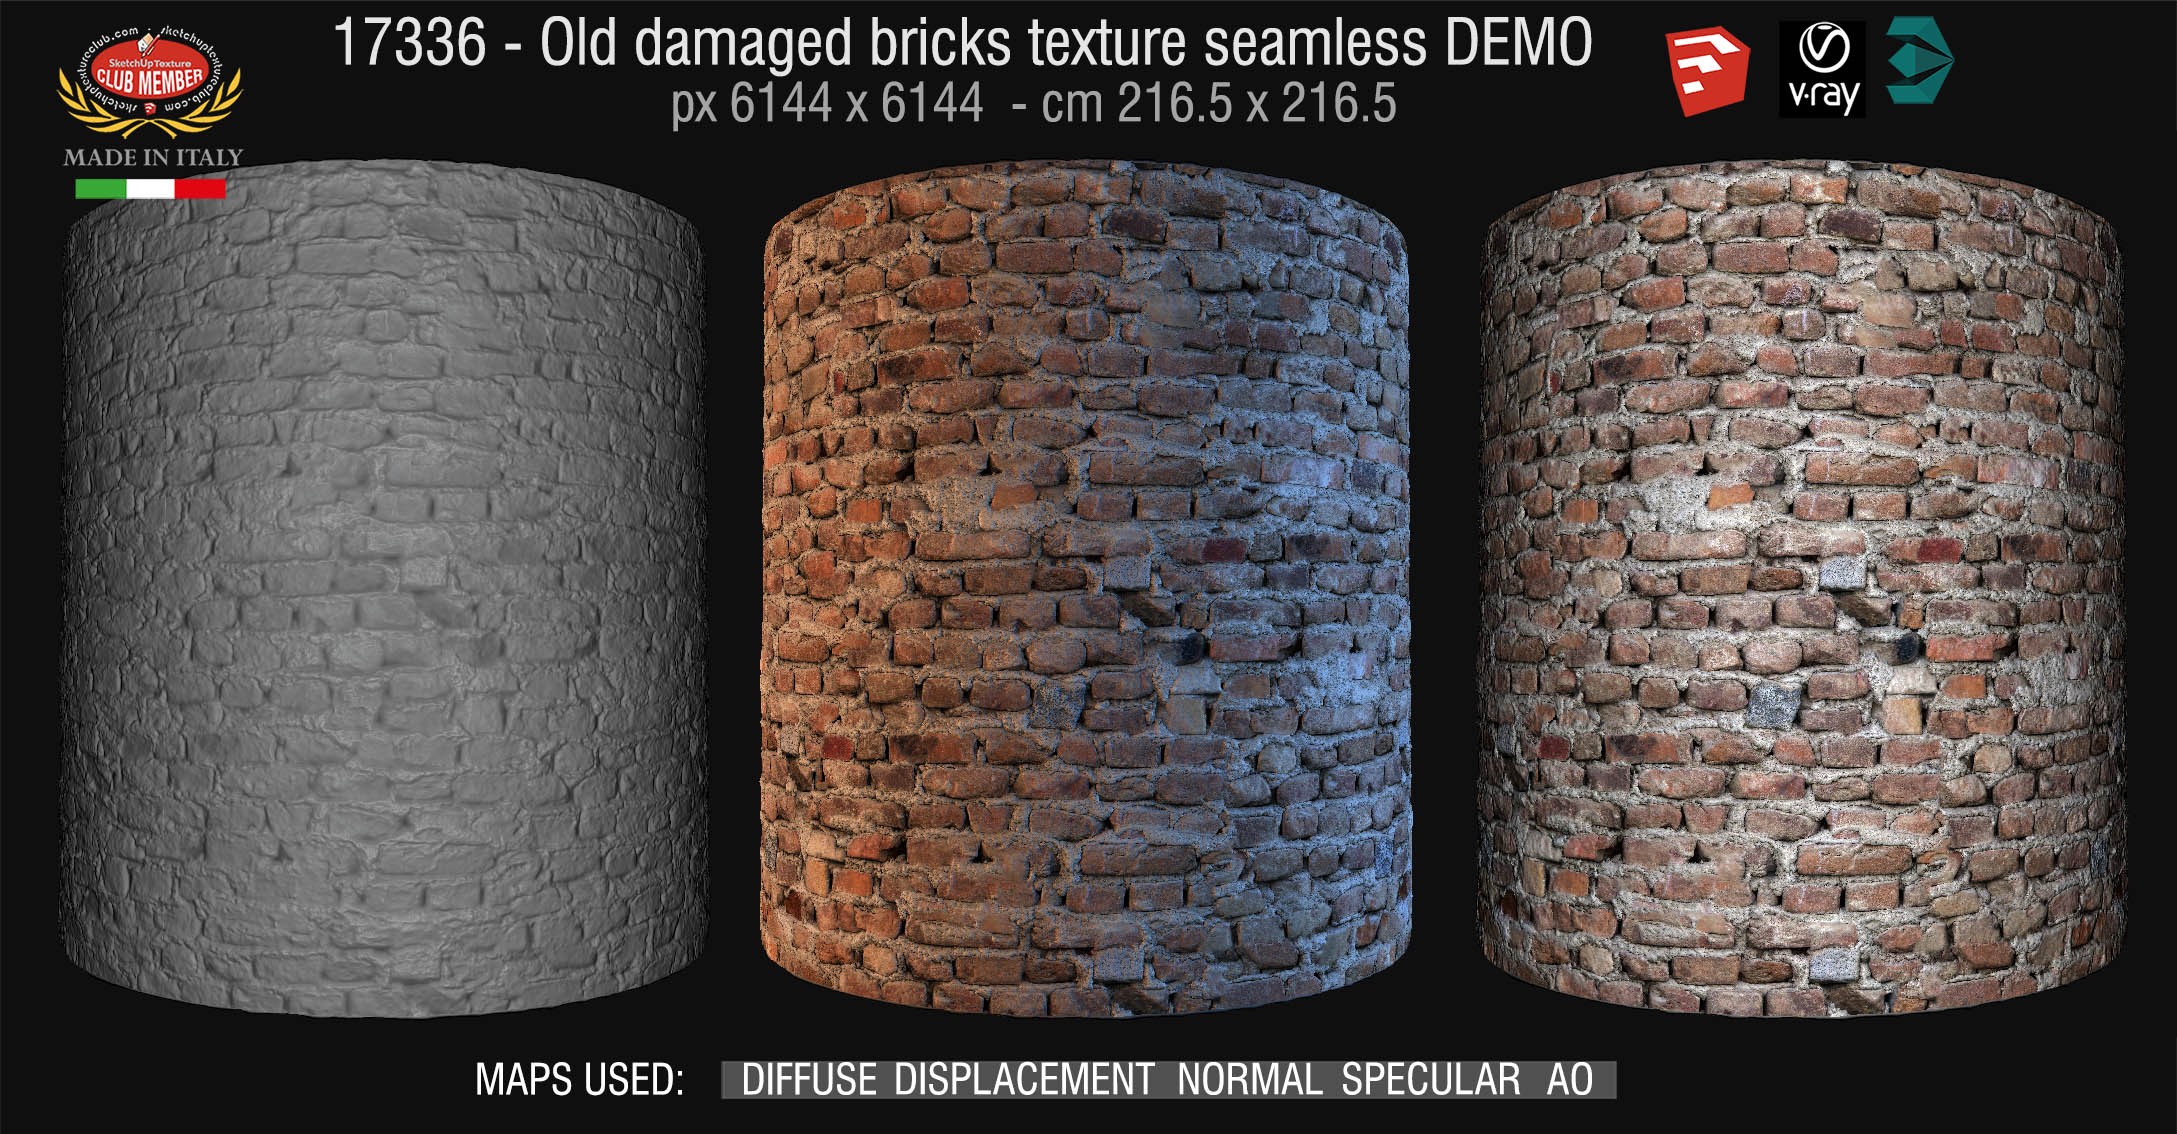 17336 HR Old damaged bricks texture seamless + maps DEMO